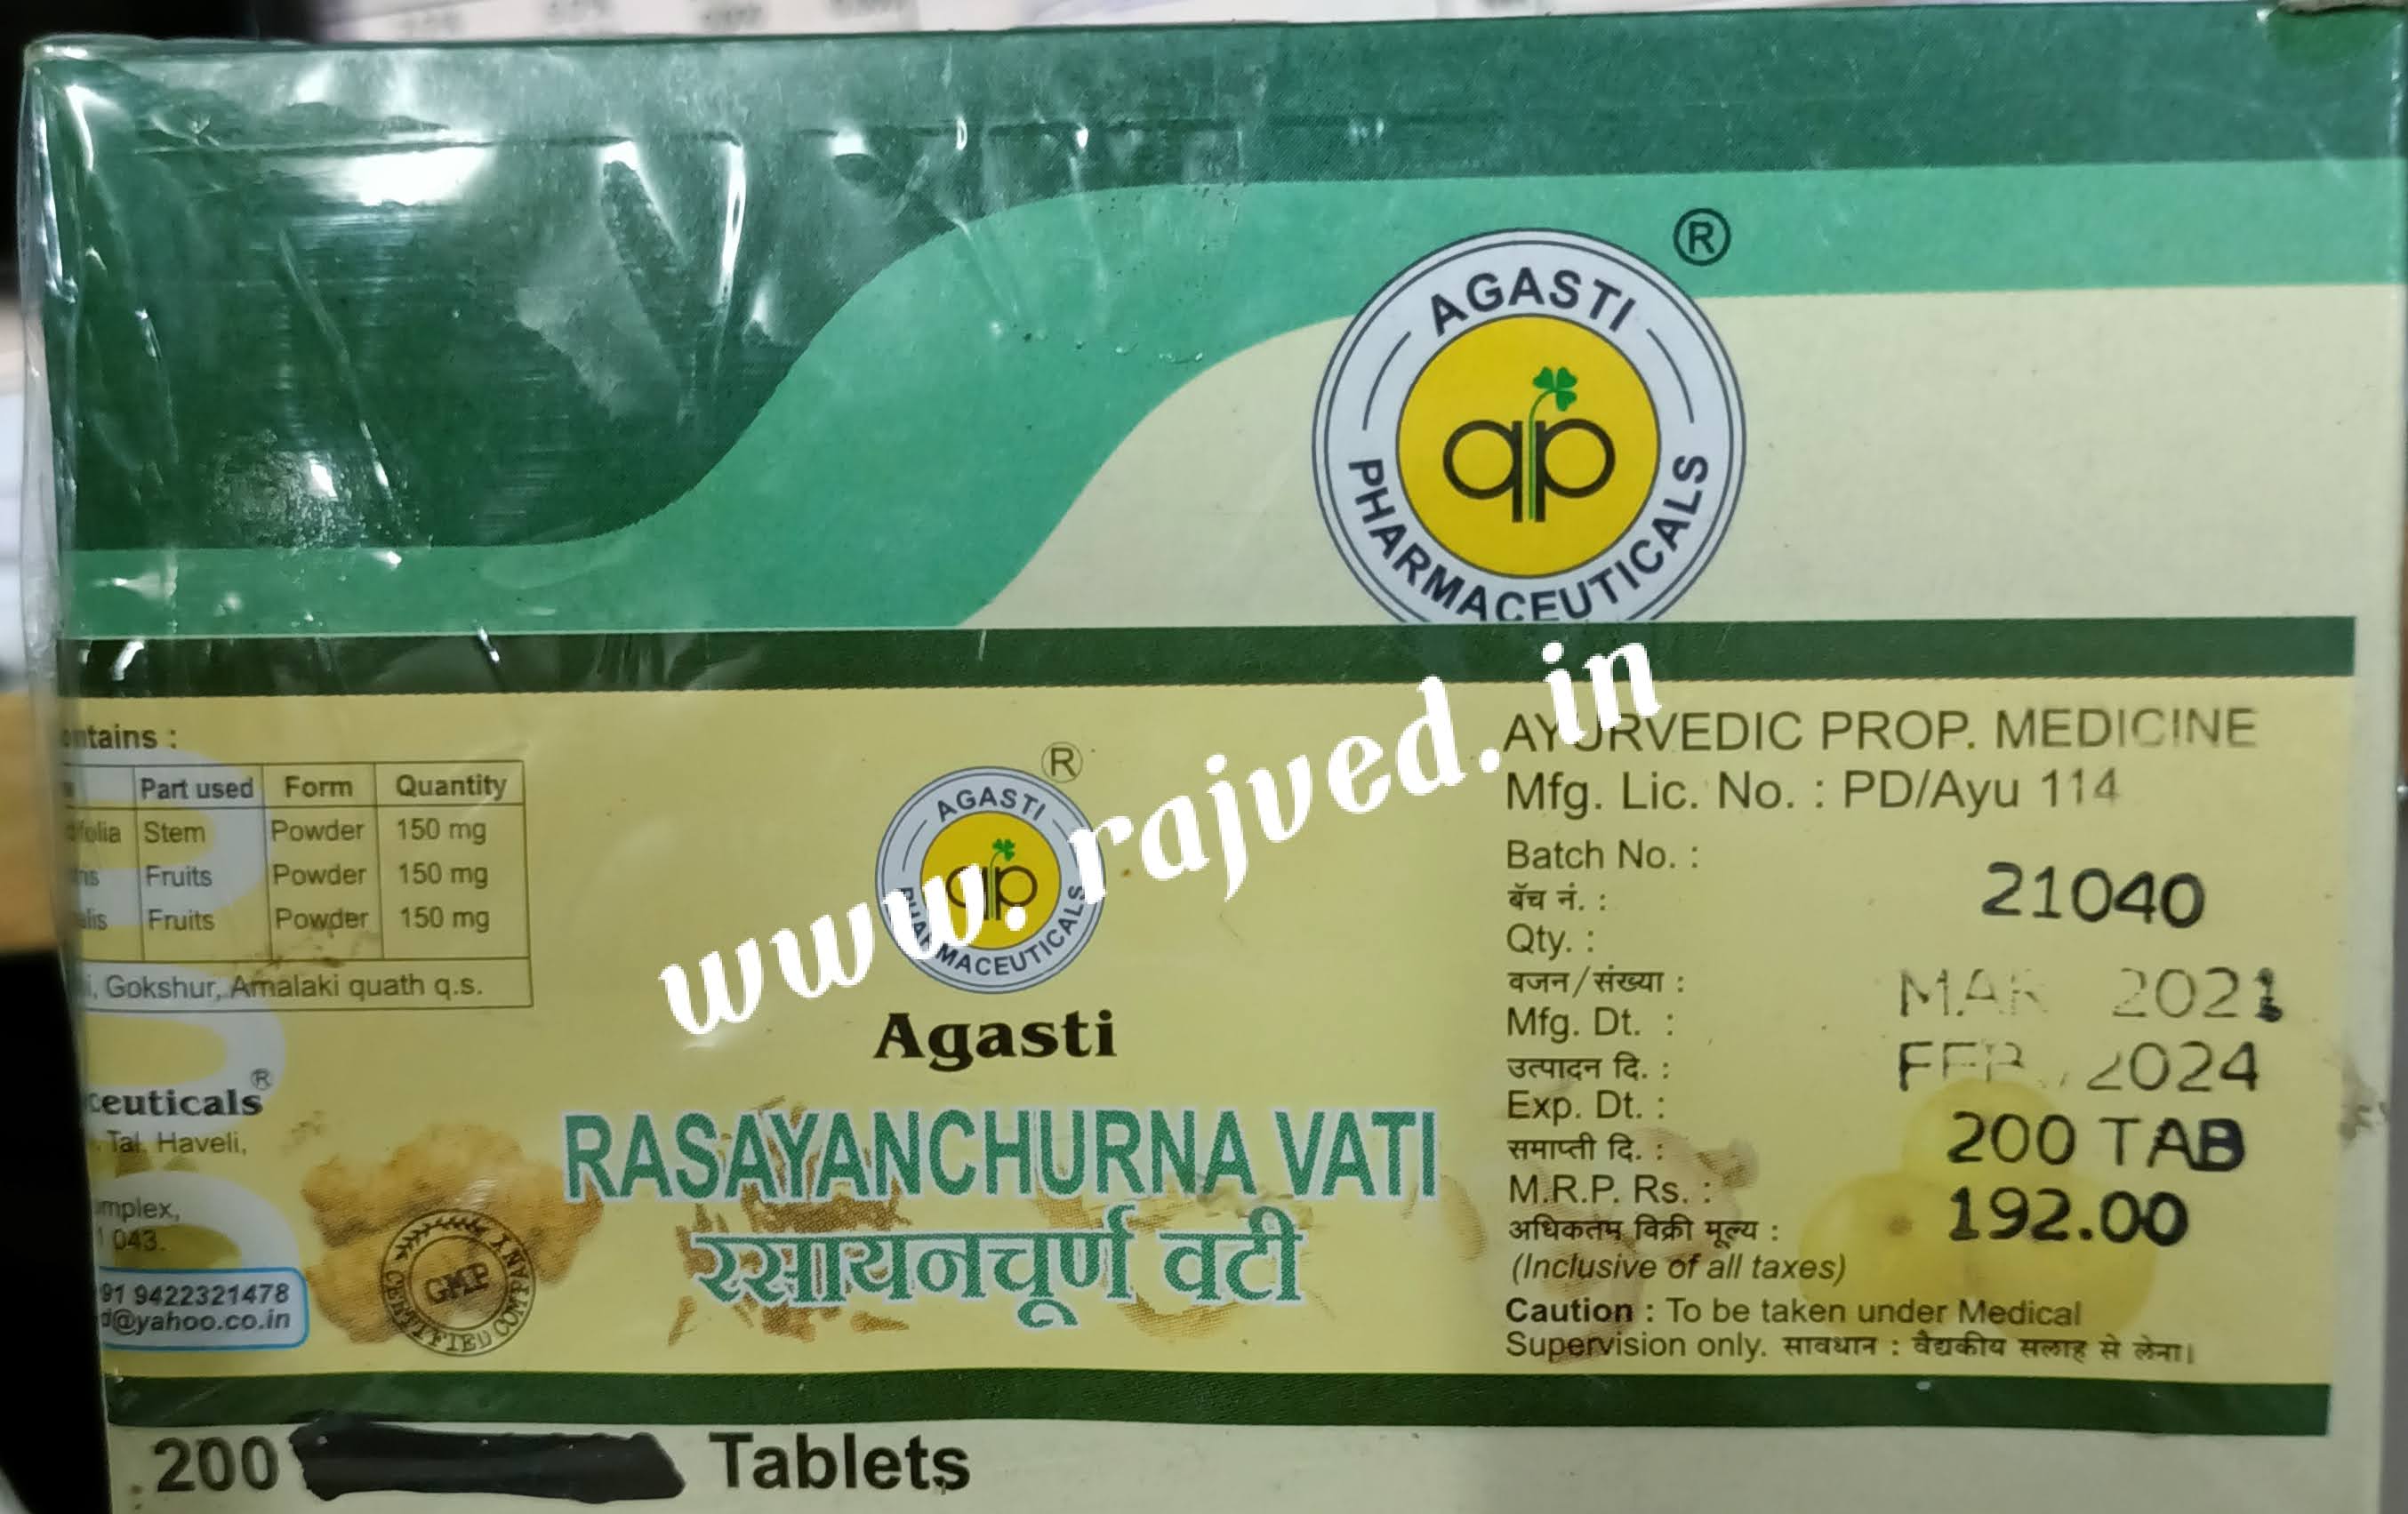 rasayan churna vati tablets 1 kg 2000 tabs upto 15% off agasti pharmaceuticals